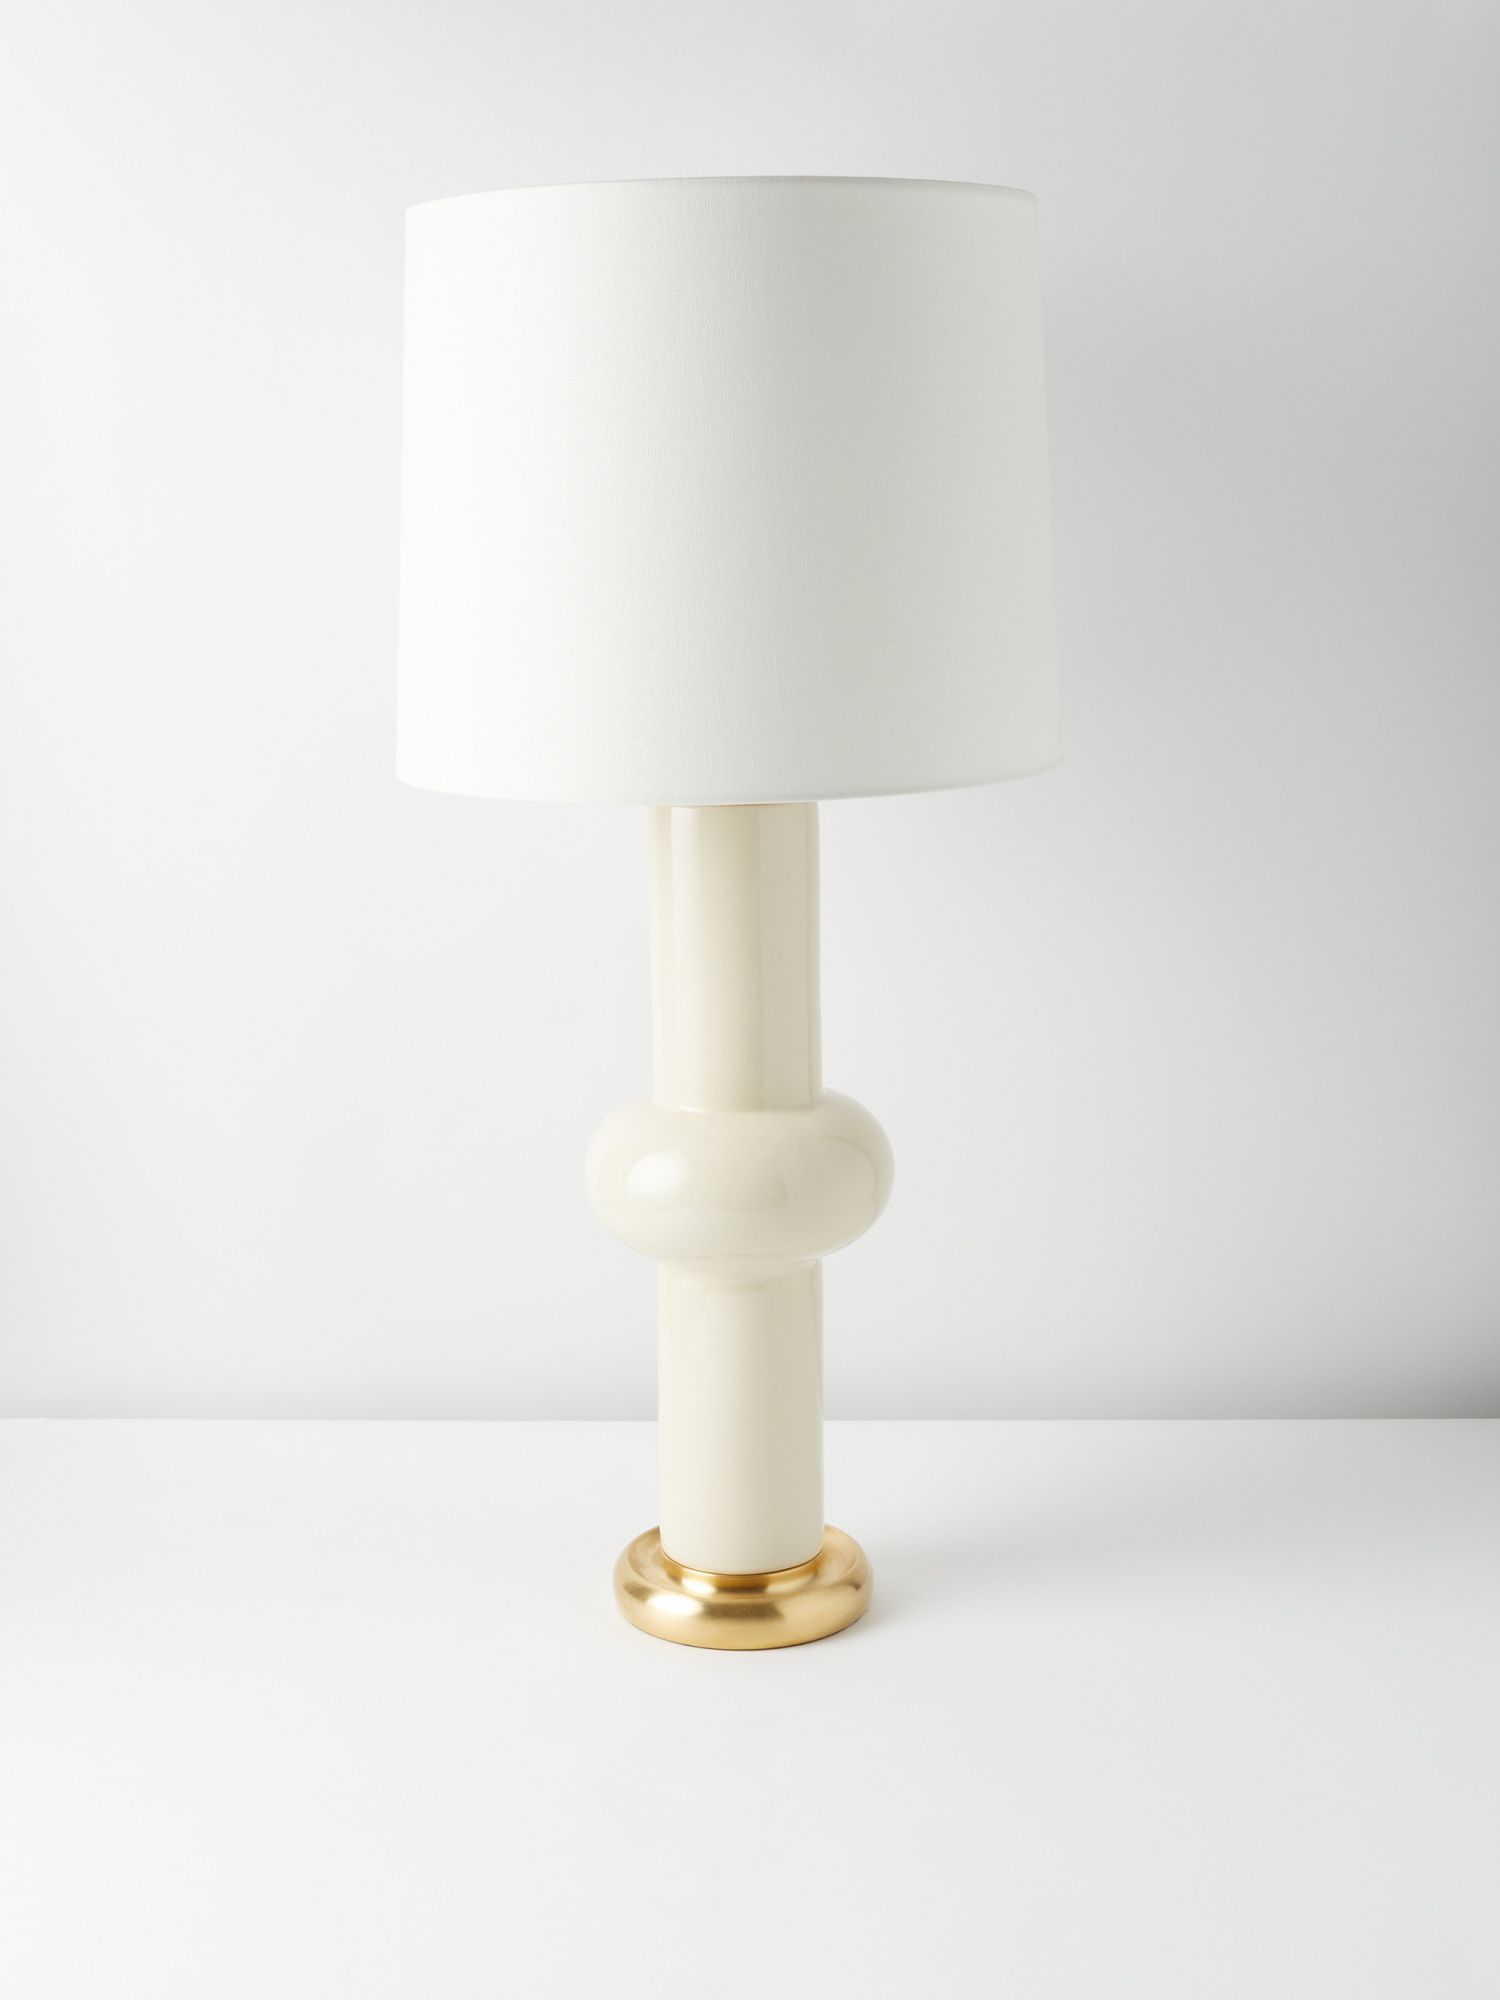 36in Bibi Ceramic Table Lamp | Table Lamps | HomeGoods | HomeGoods